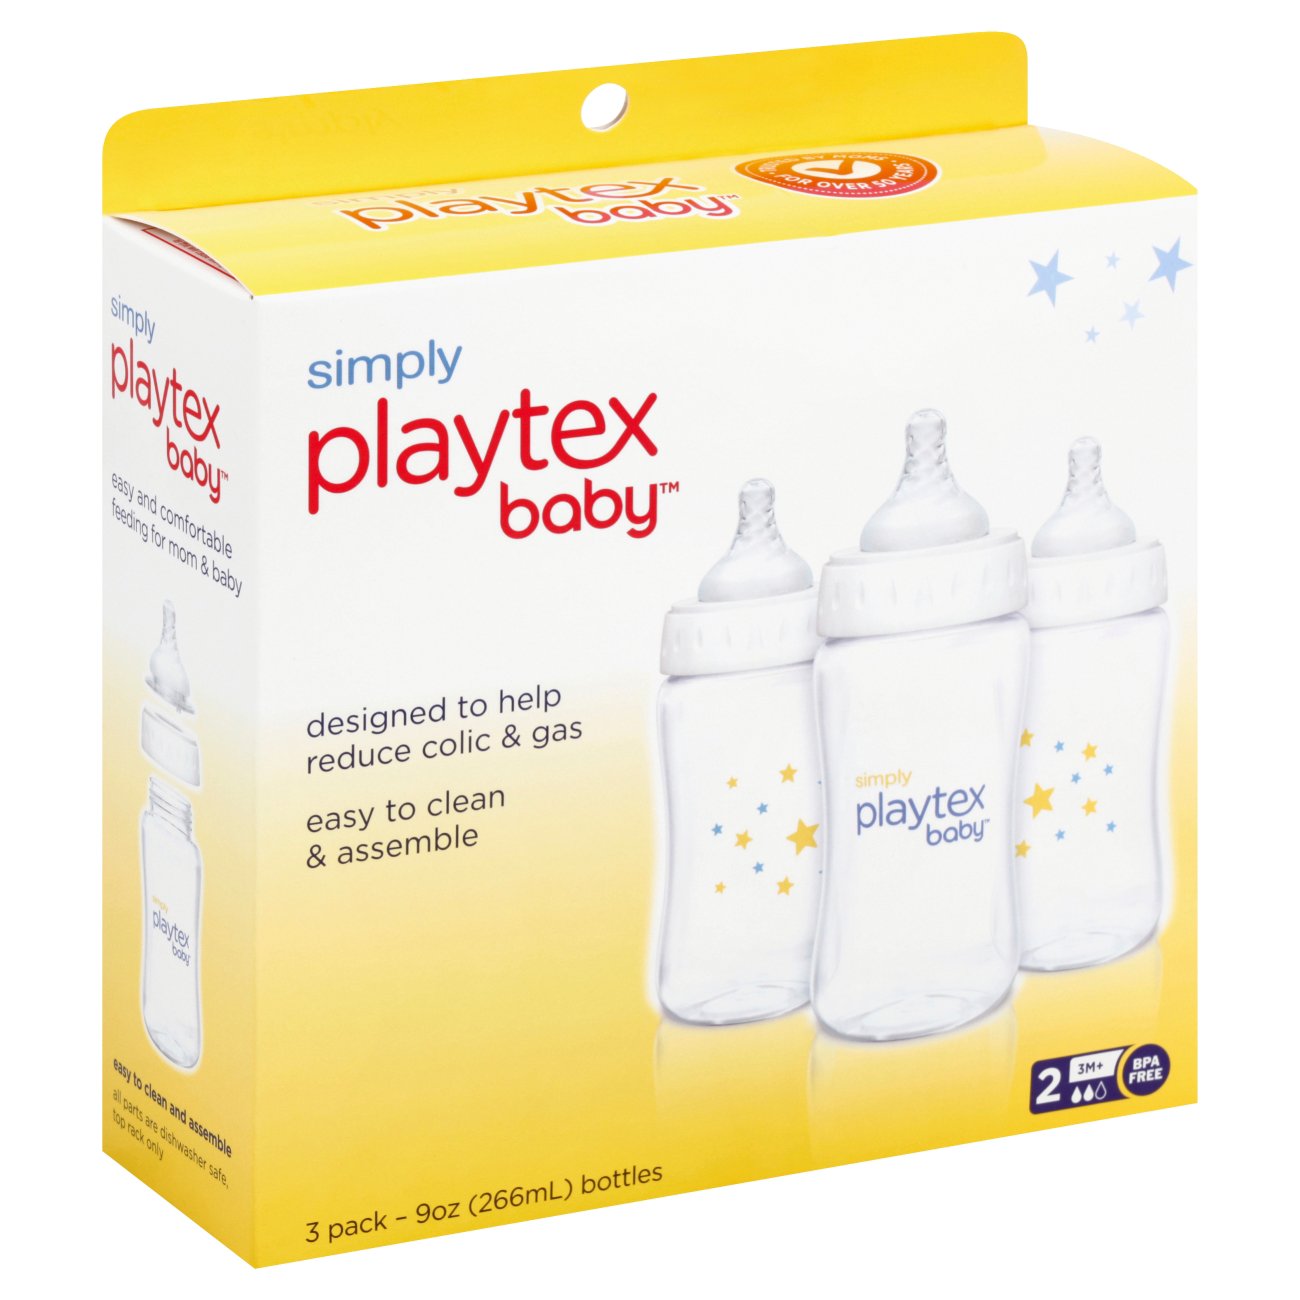 simply playtex baby